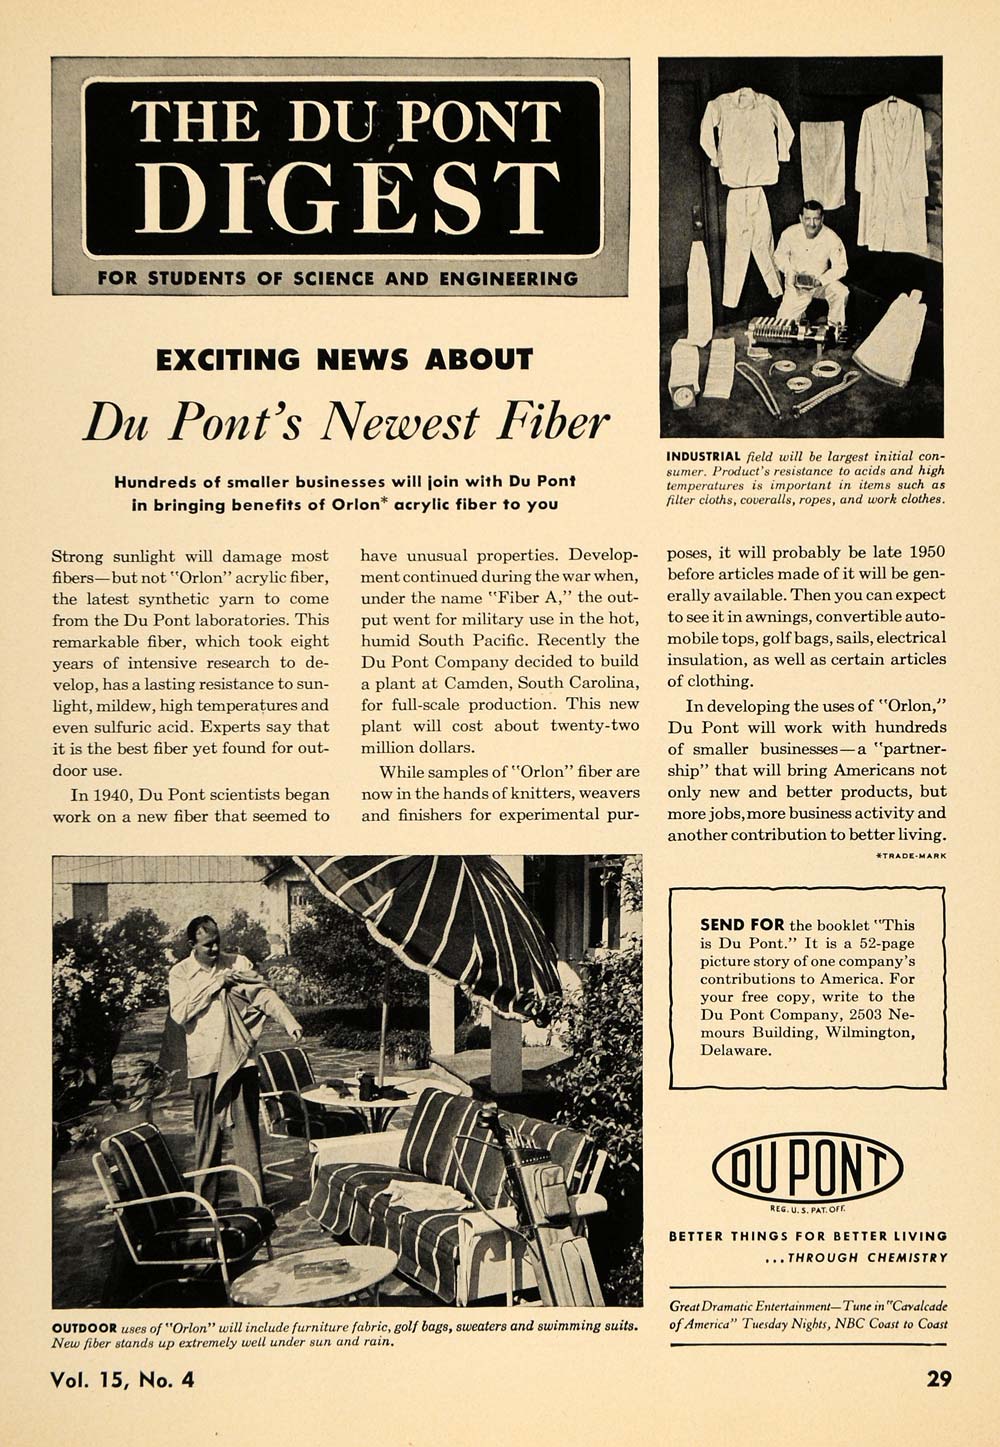 1950 Ad Du Pont Digest Fiber Orlon Acrylic Clothing - ORIGINAL ADVERTISING TCE1